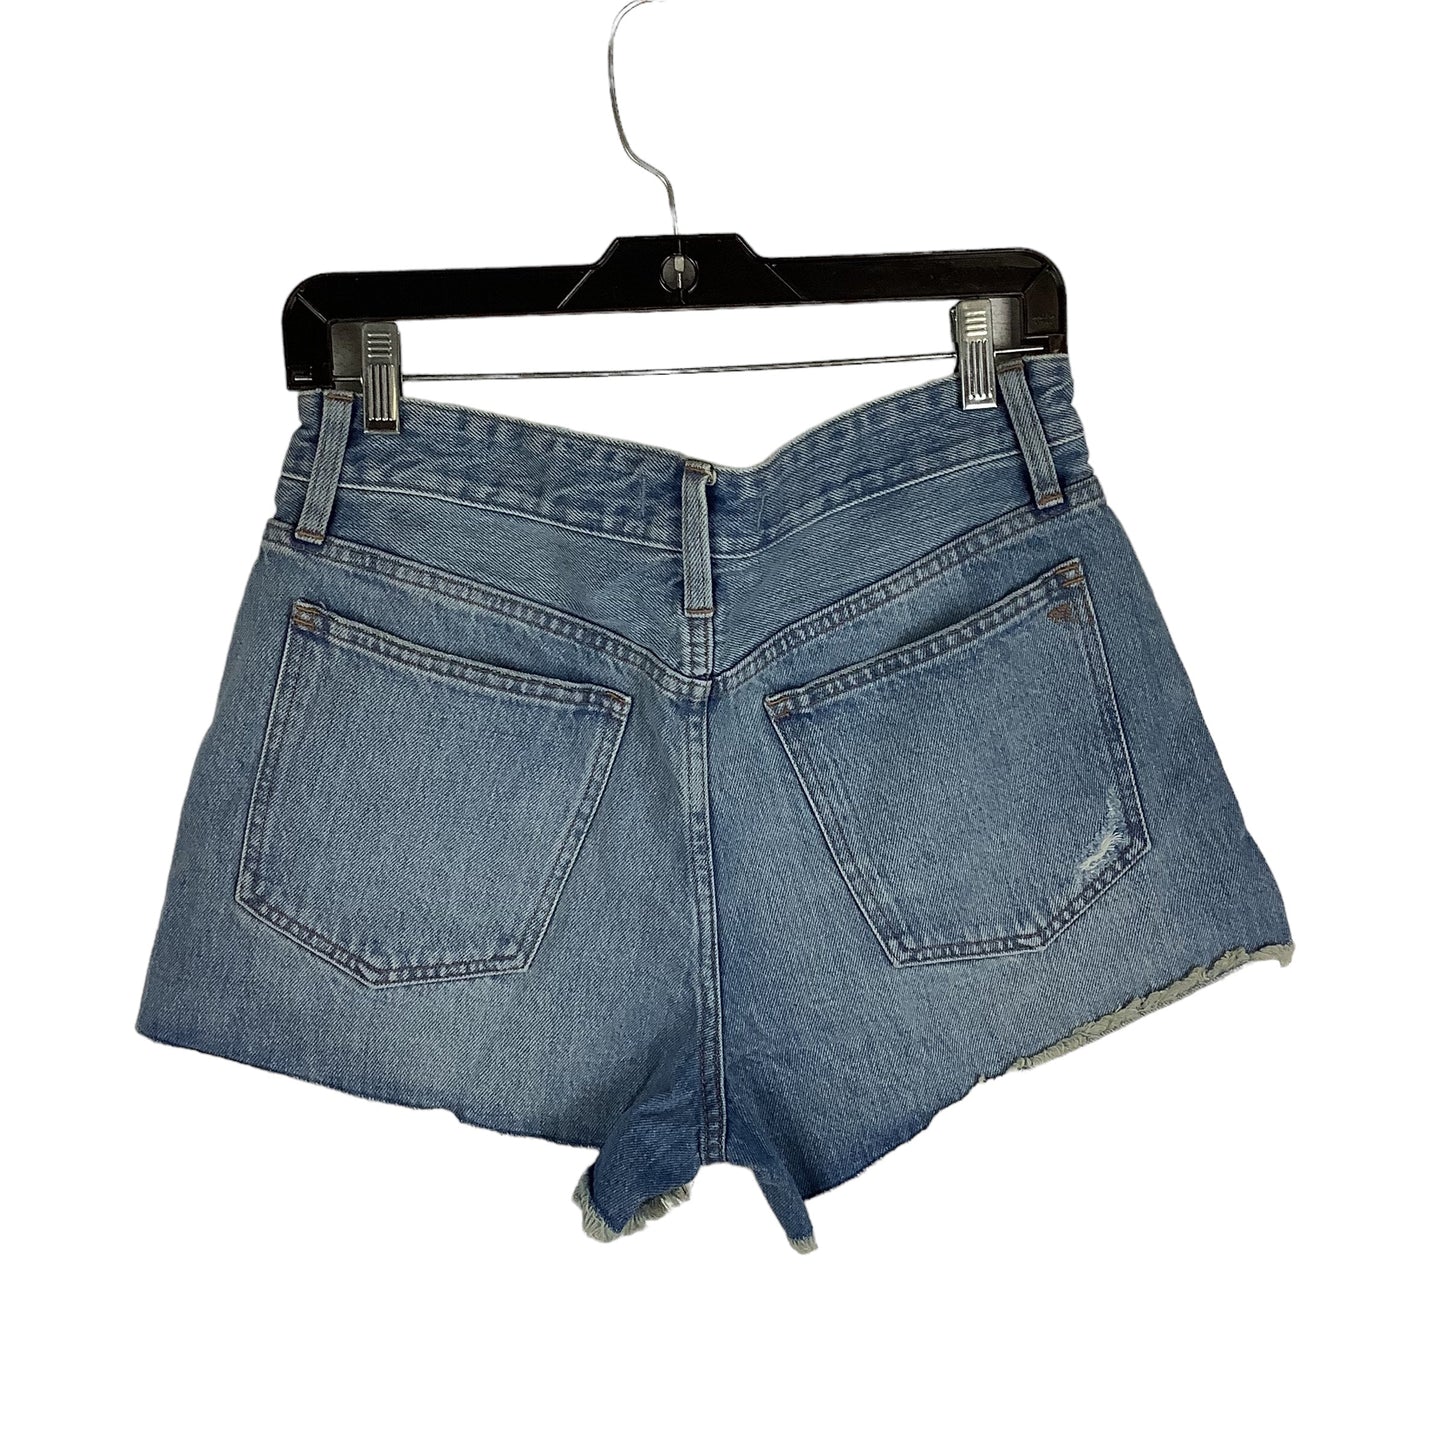 Blue Denim Shorts Madewell, Size 4 (27)